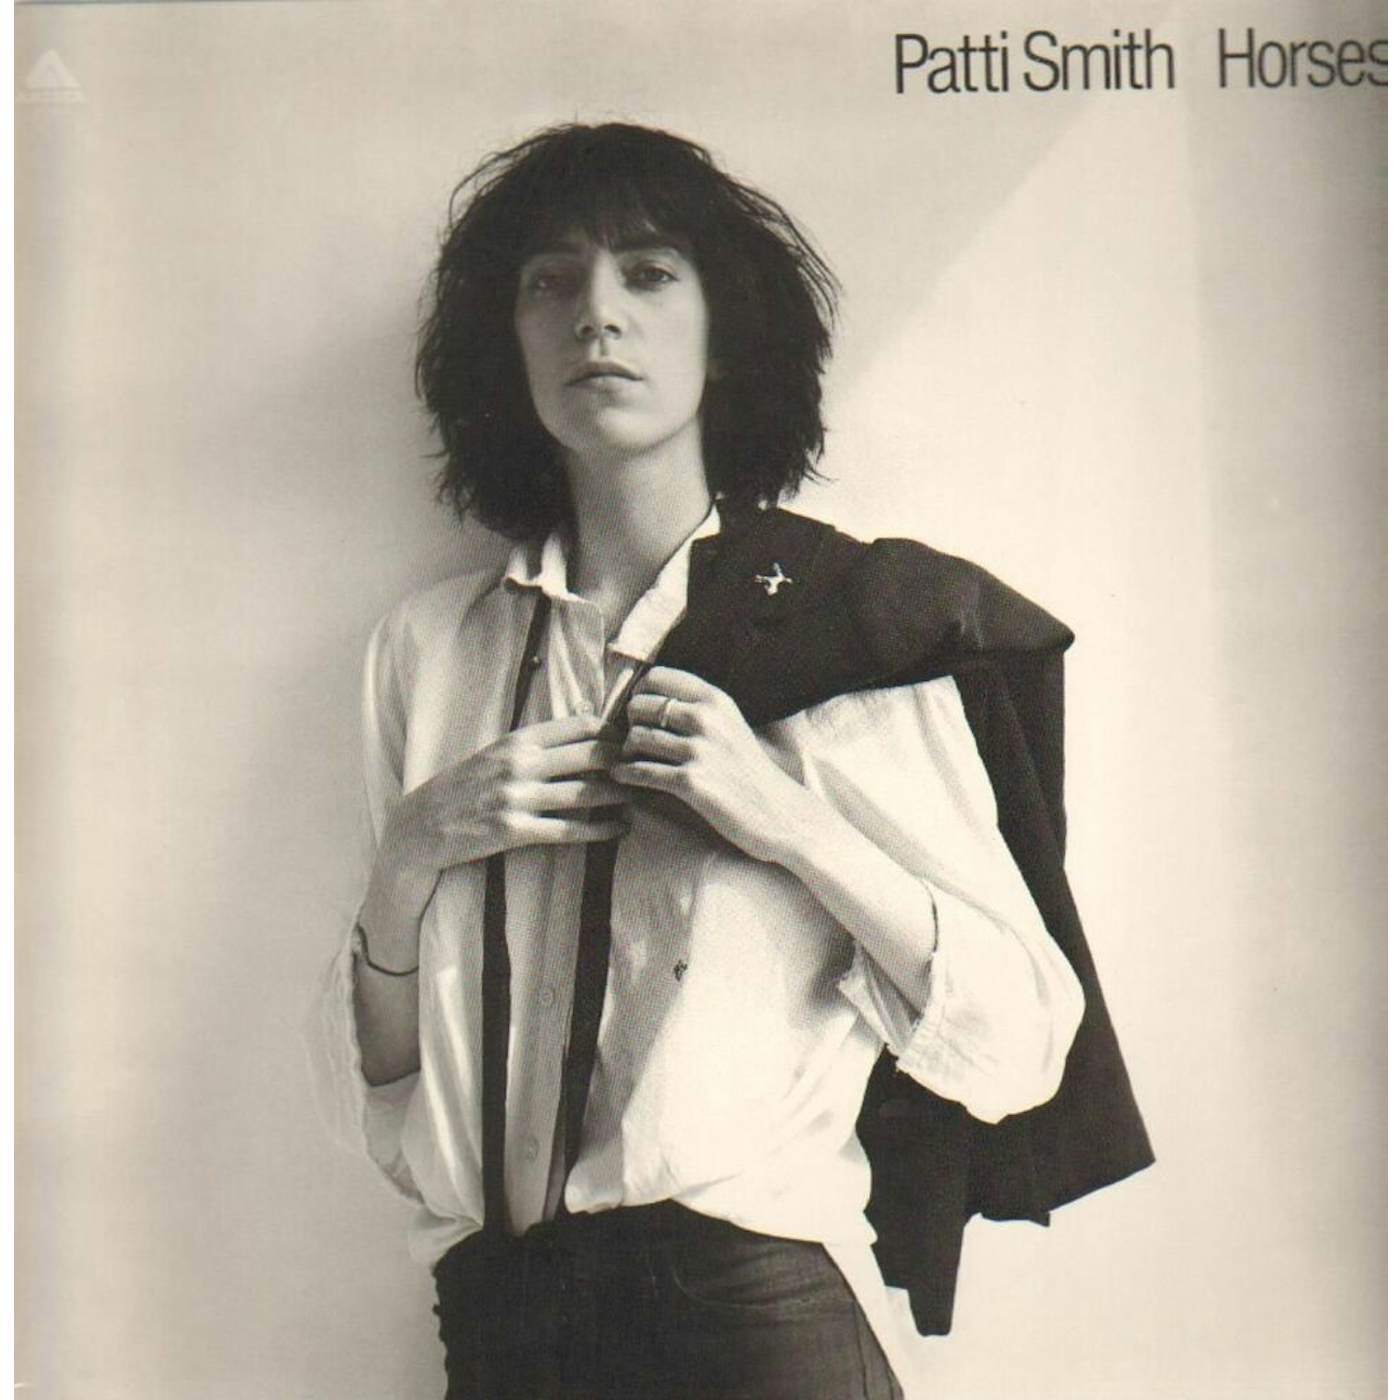 Patti Smith LP Vinyl Record - Horses